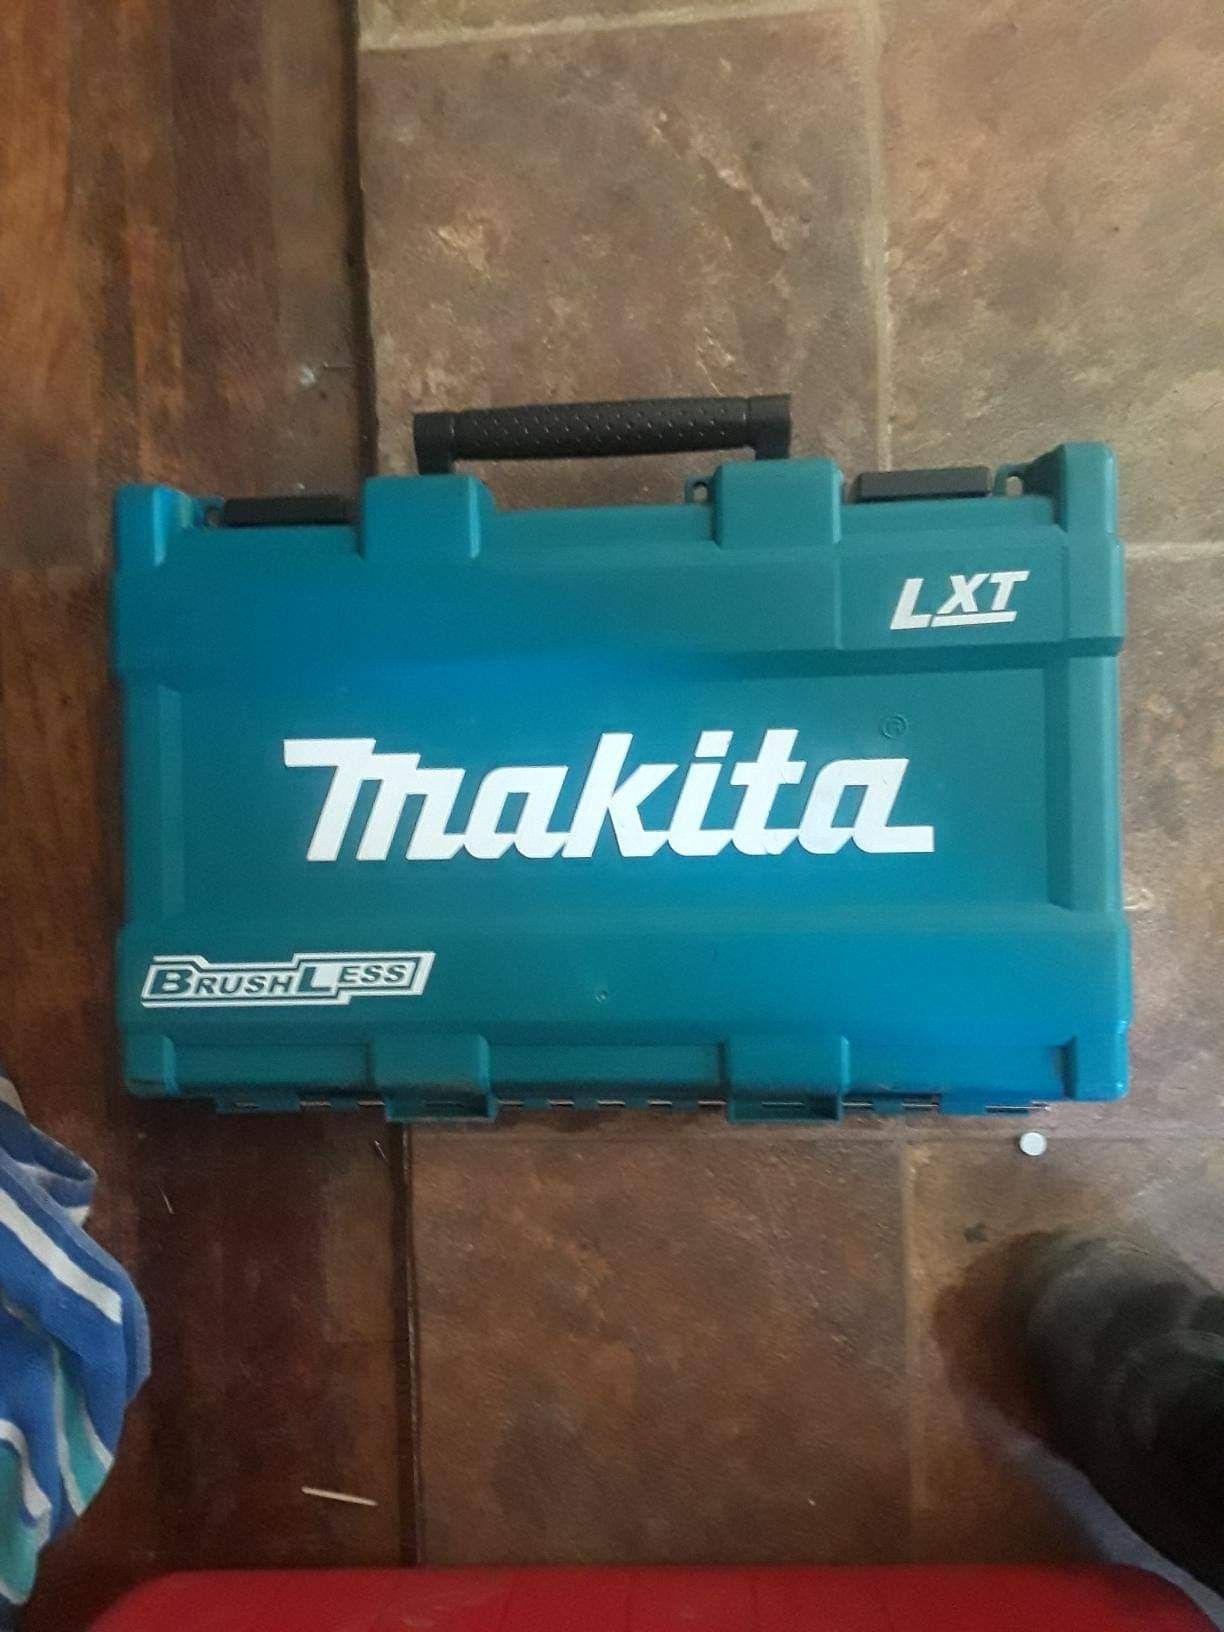 Makita brushless drill set Ltx